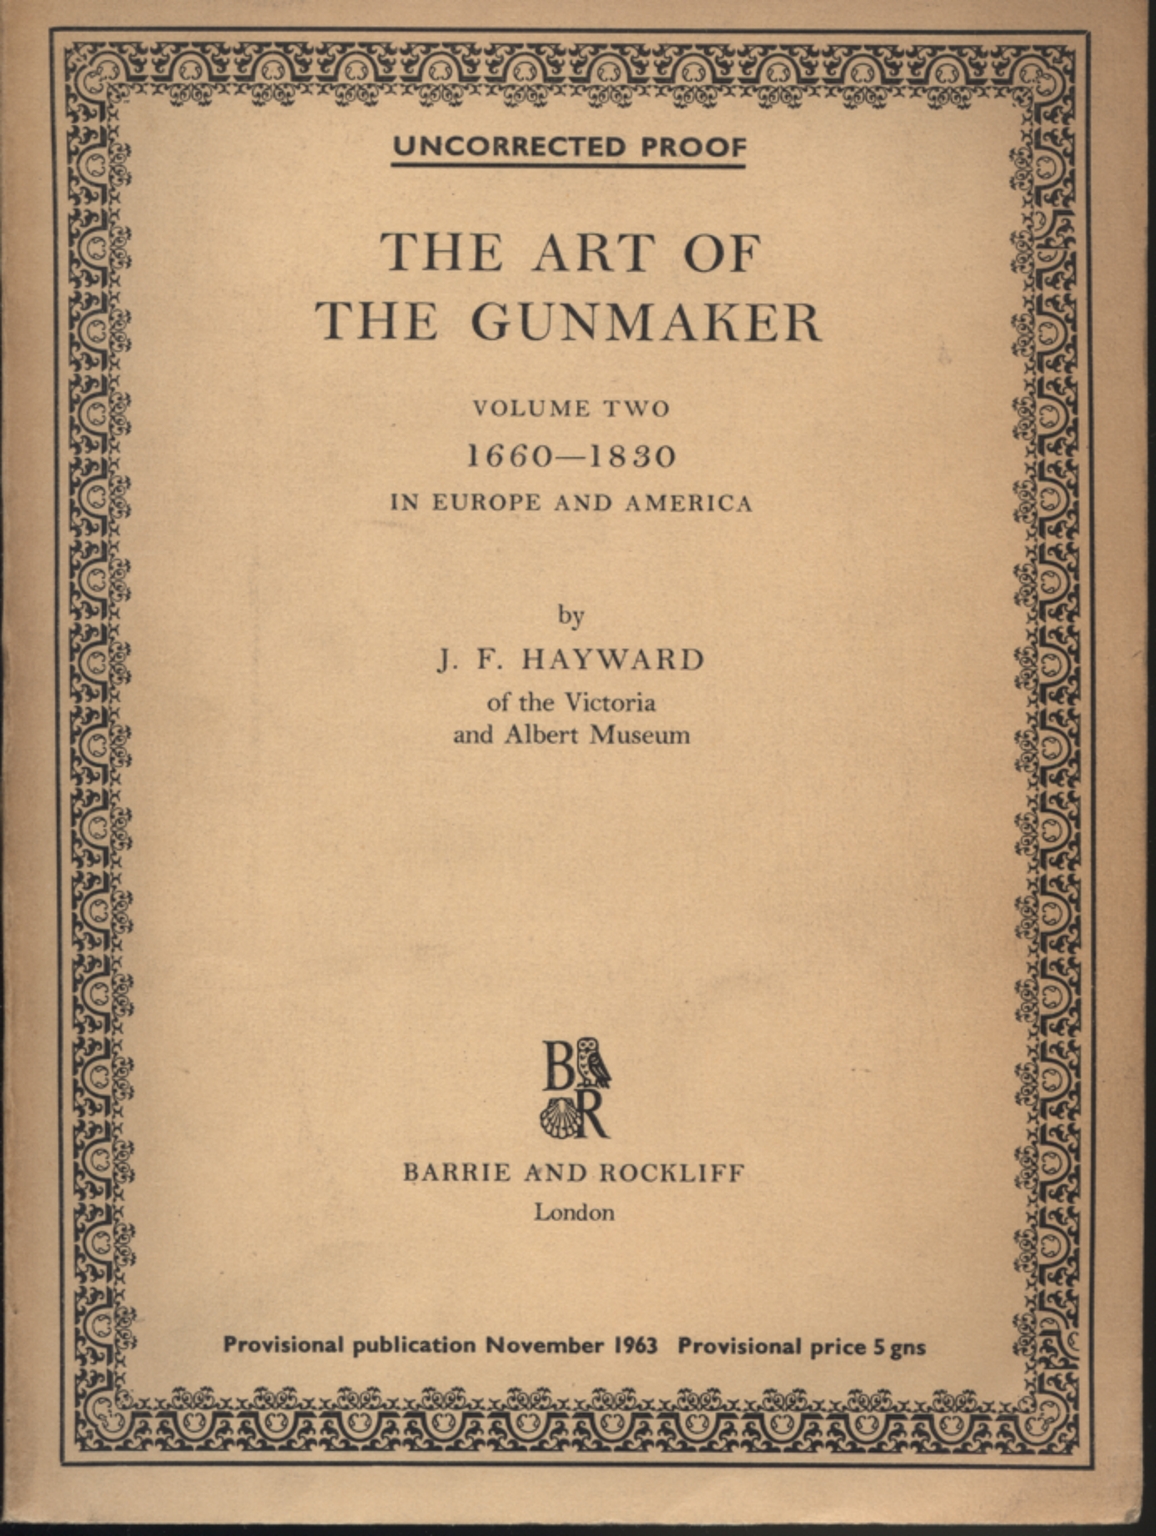 The Art of the Gunmaker Volume secondo, J. F. Hayward